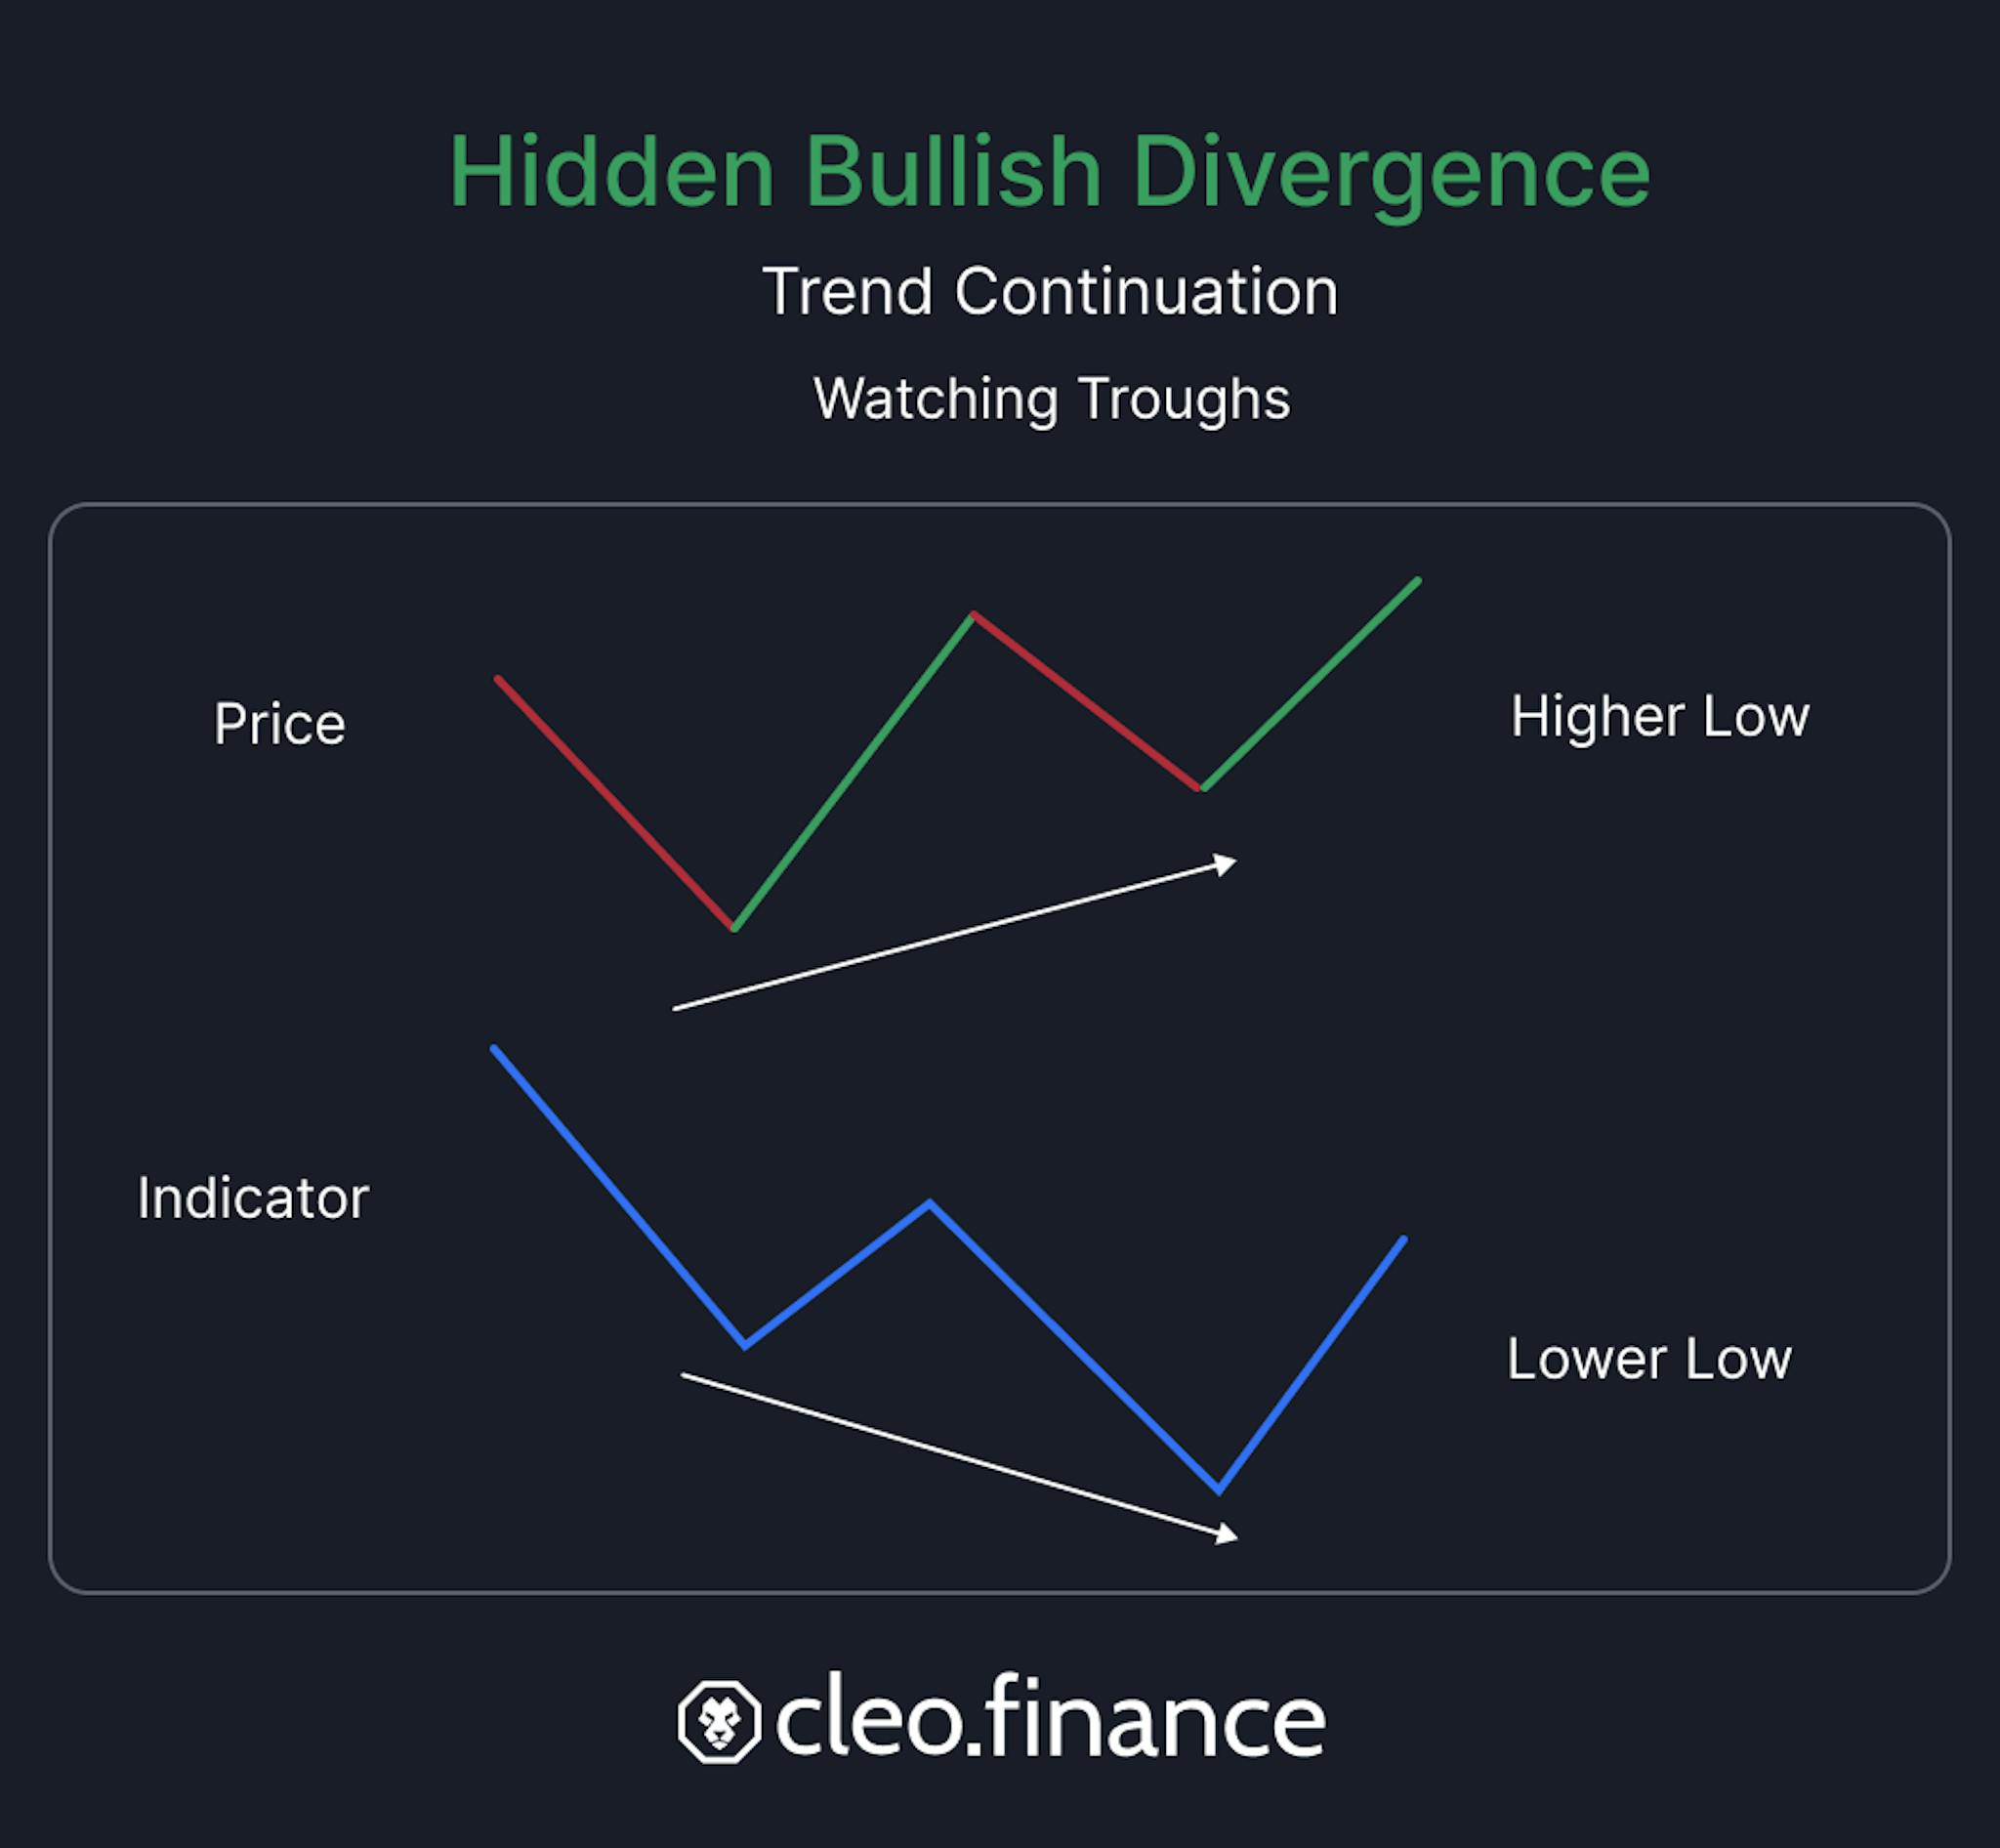 Hidden Bullish Divergence explanation